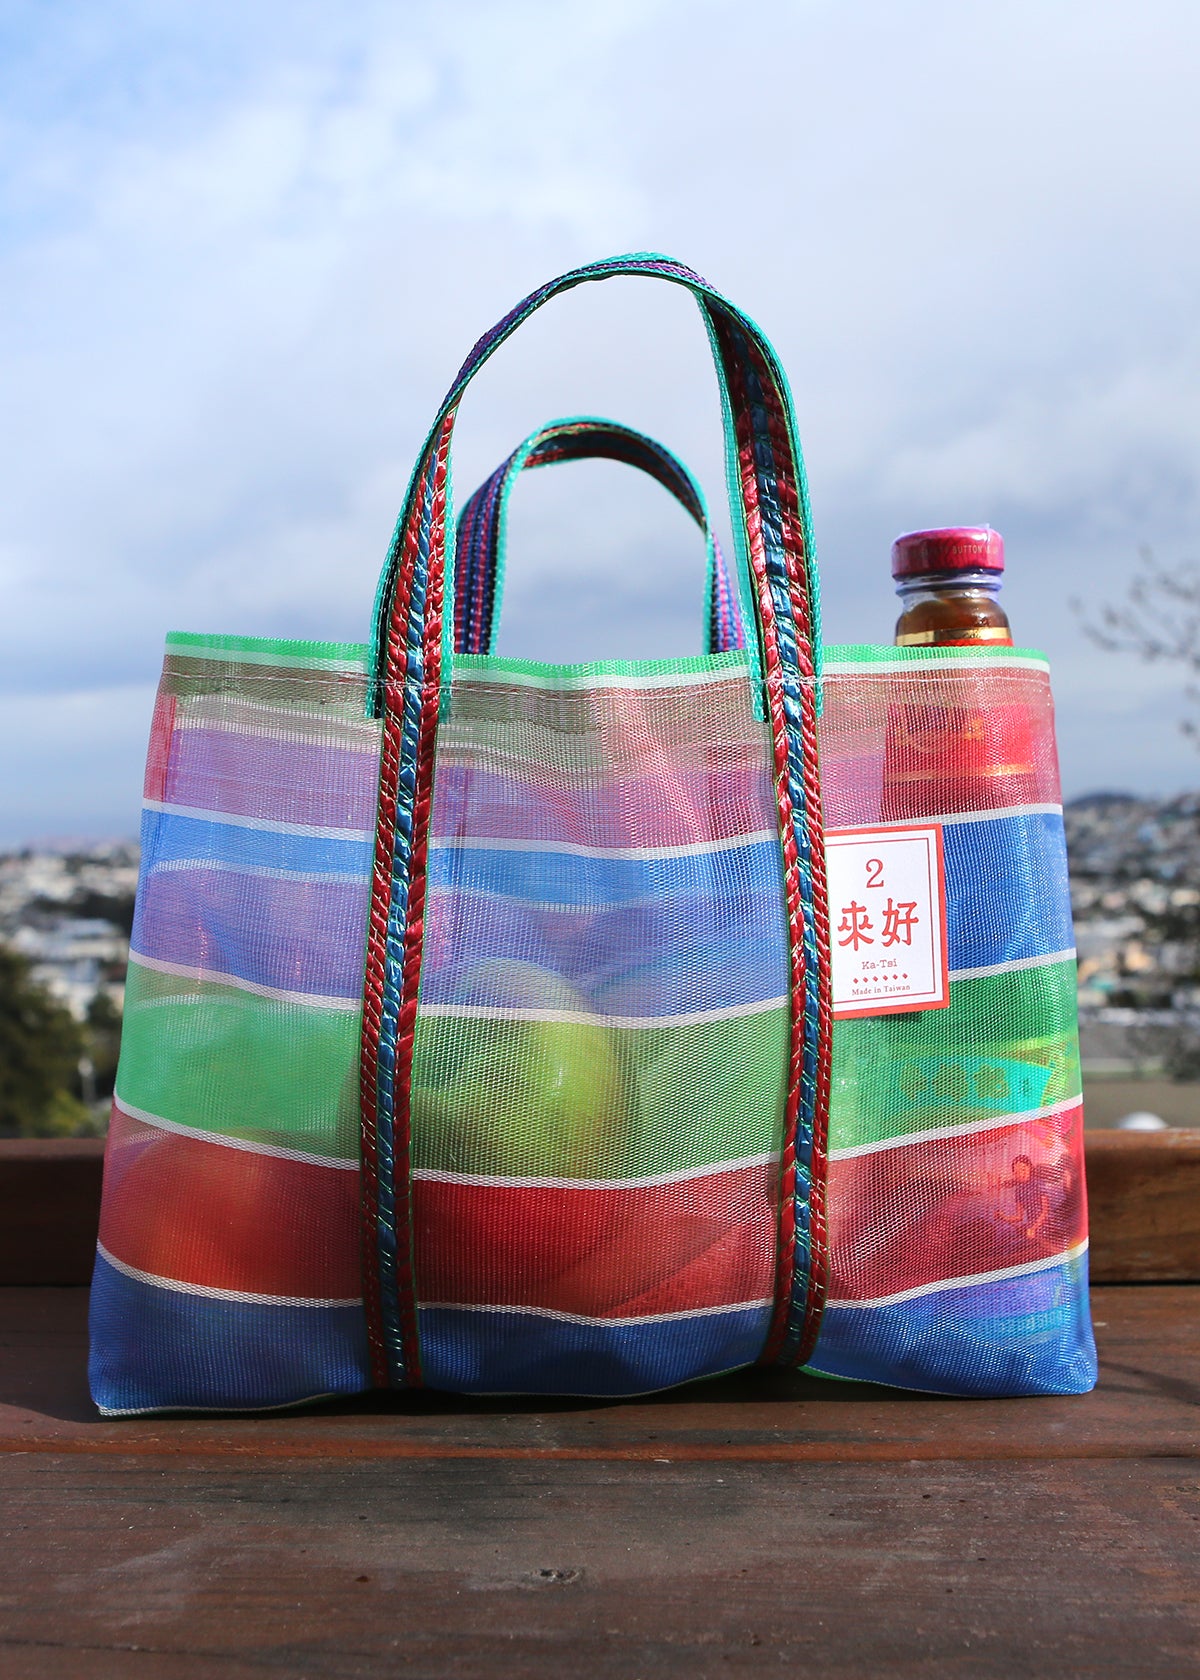 Taiwan Traditional Shopping Bag (KA-TSI) a.k.a. Taiwan LV Bag